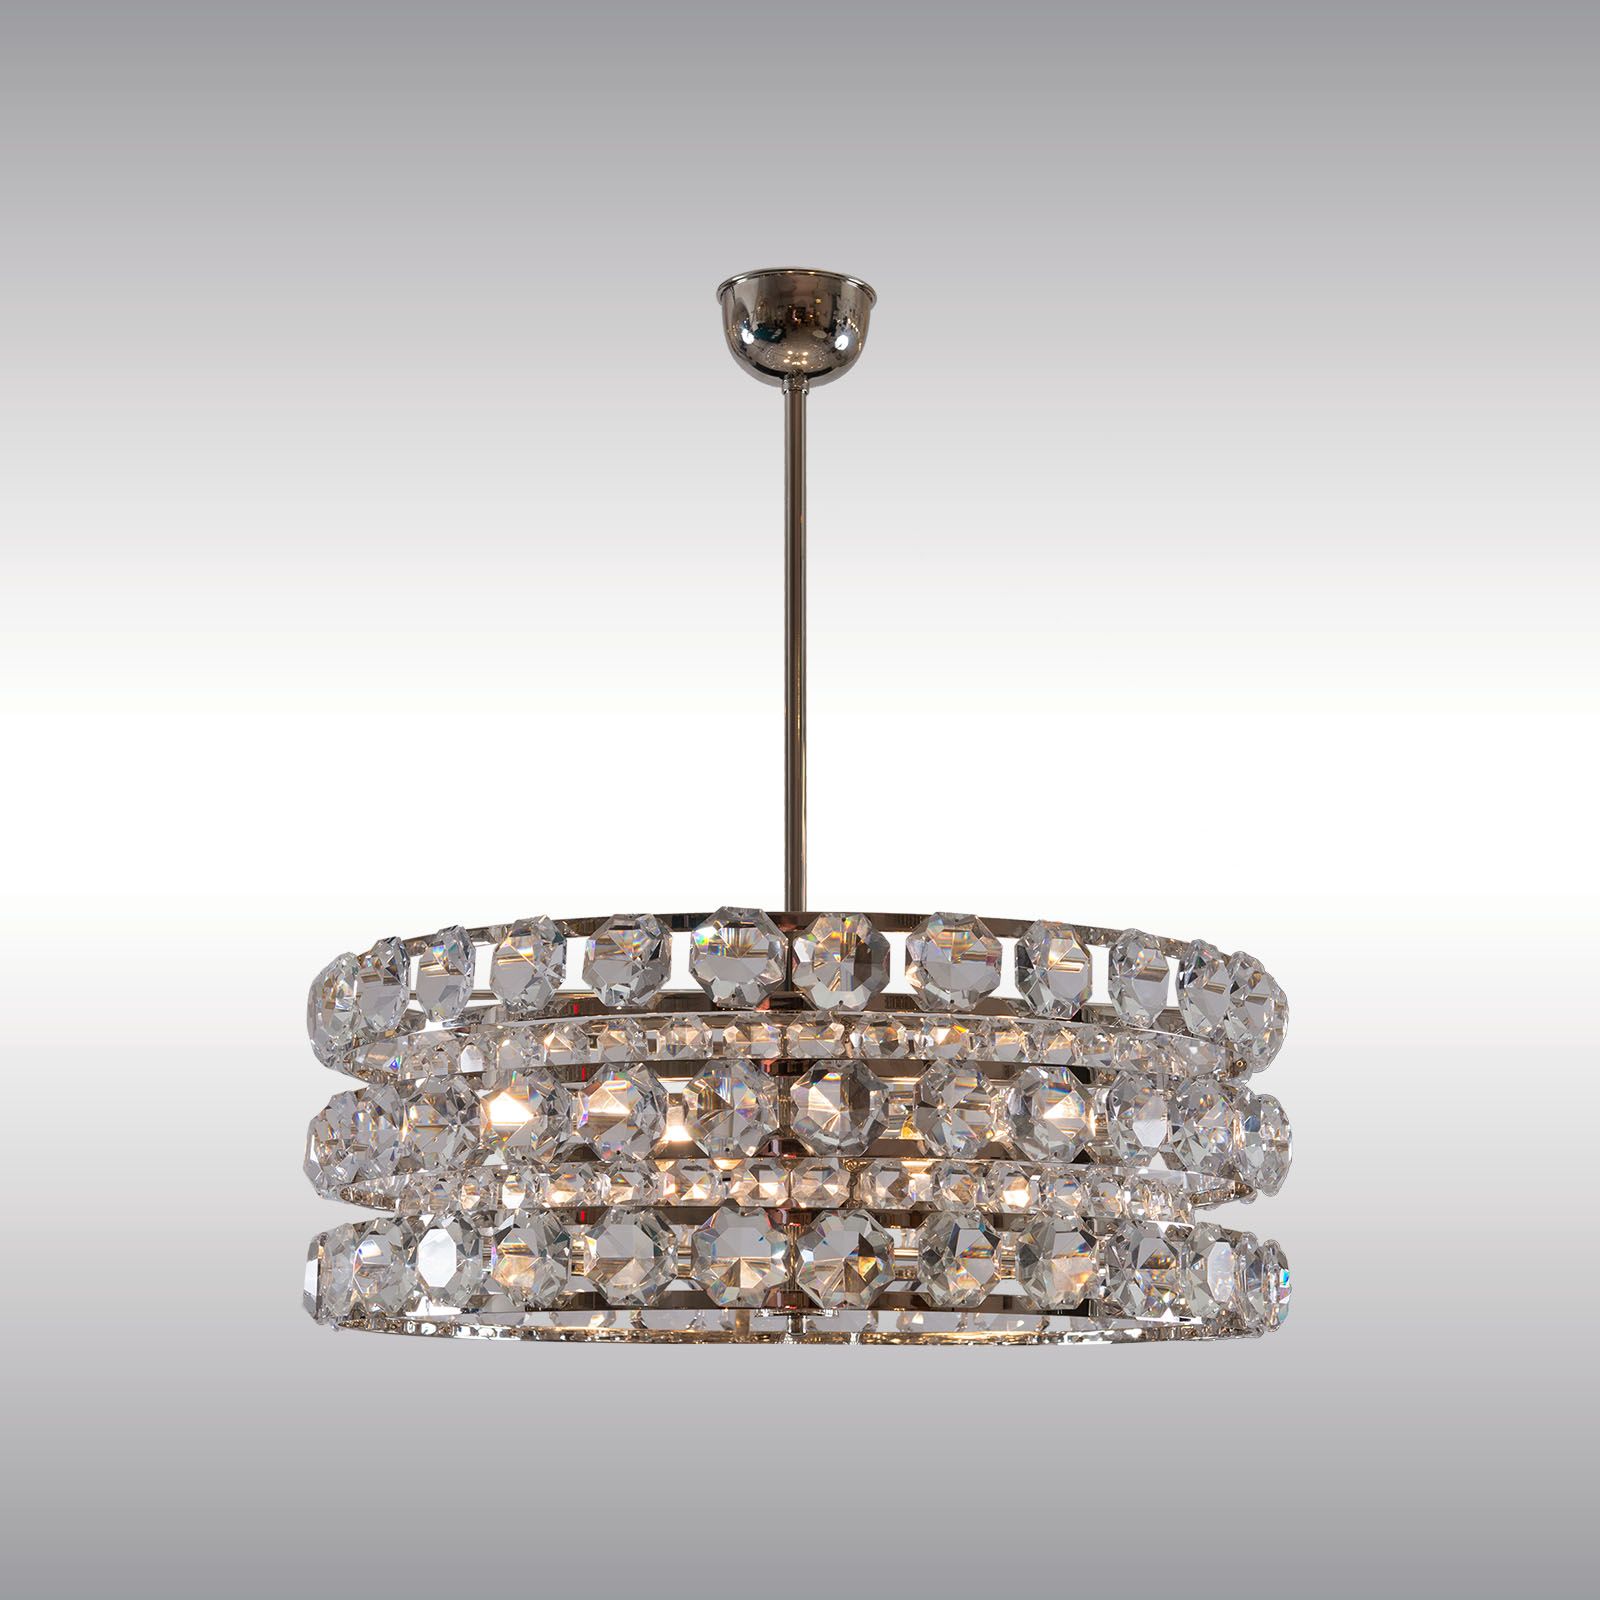 WOKA LAMPS VIENNA - OrderNr.: 21727|Mid Century Modern Crystal Chandelier